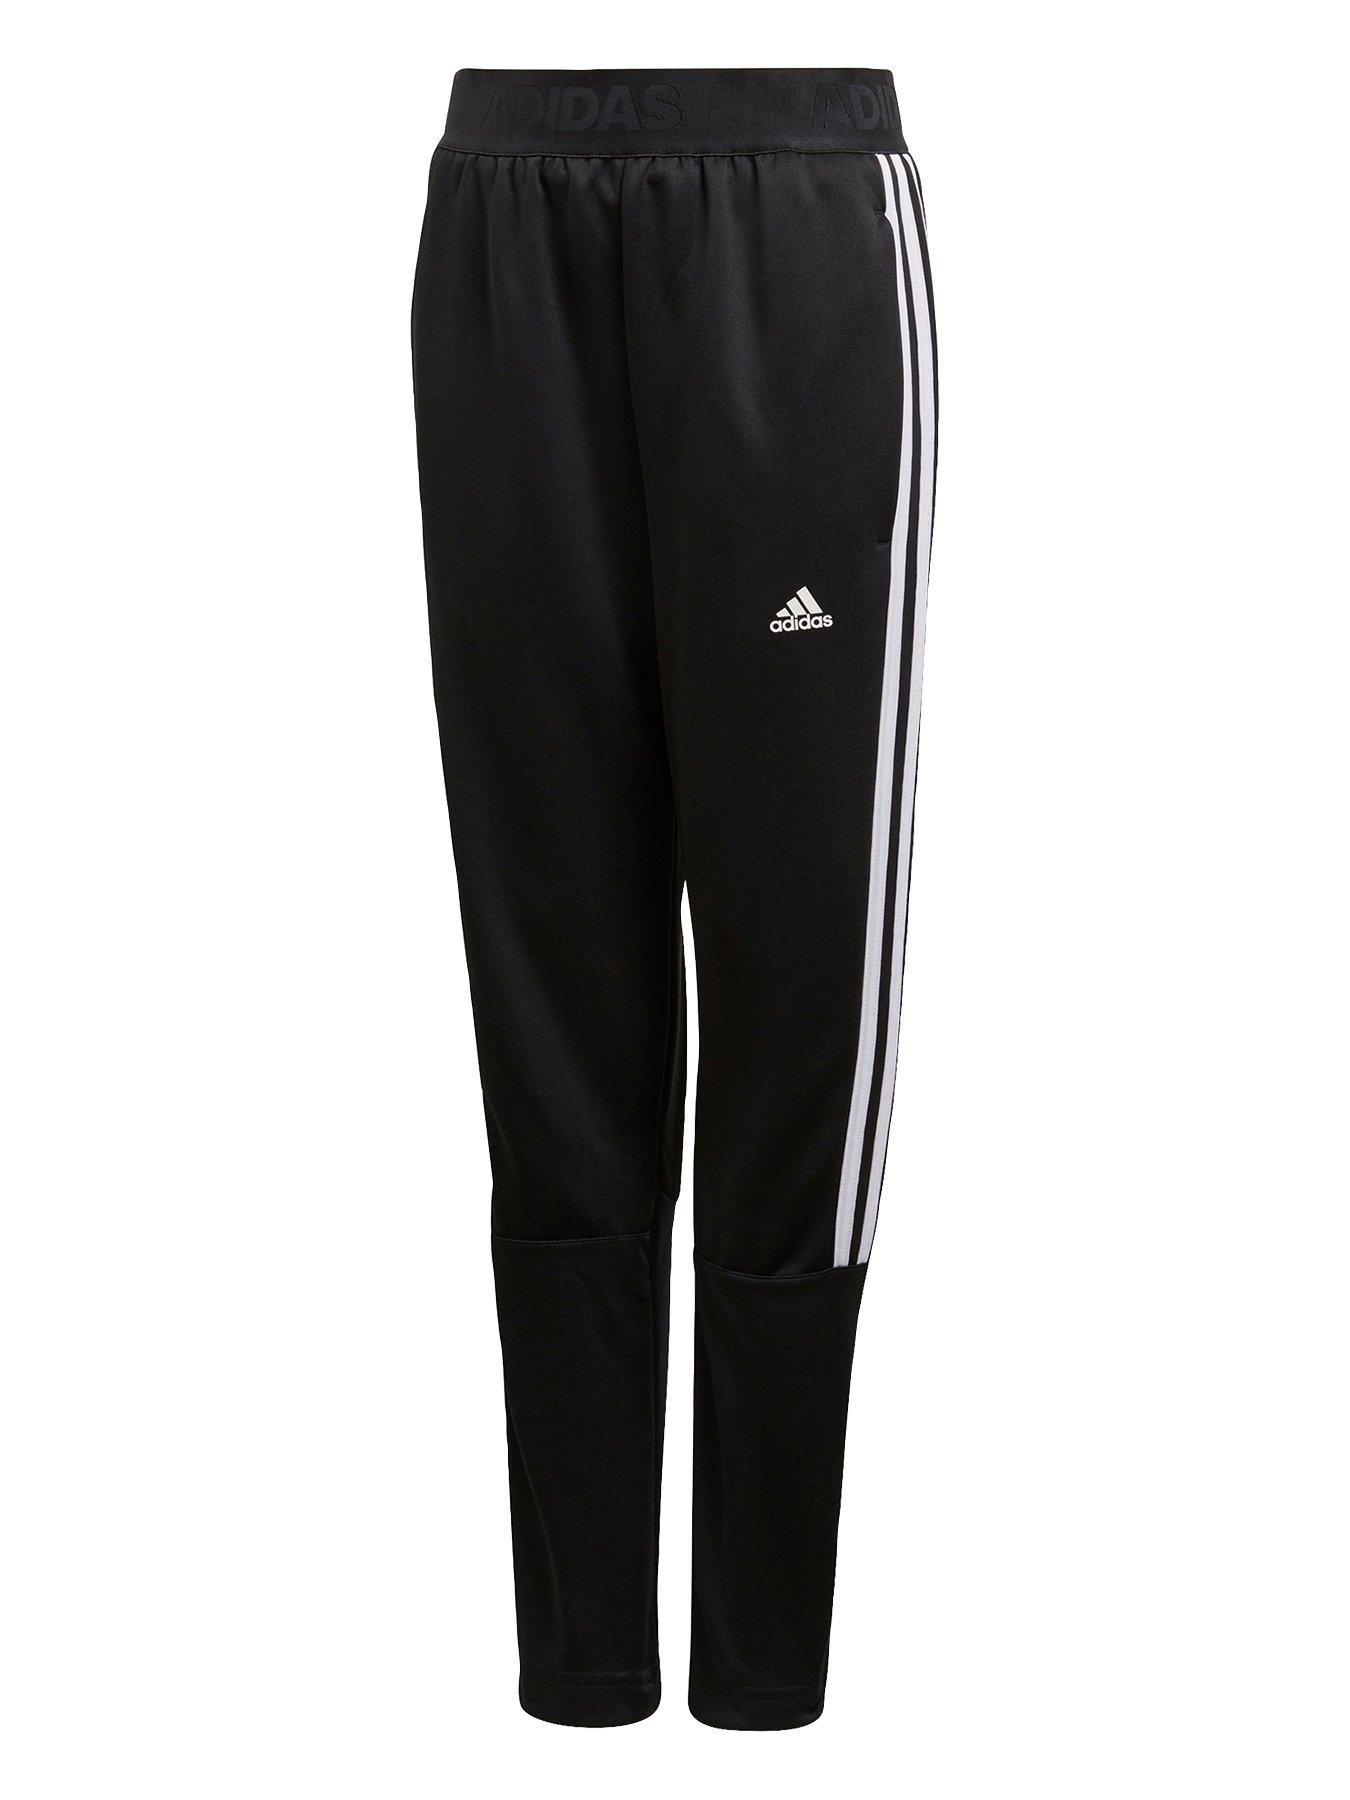 adidas Youth 3 Stripe Tiro Pants - Black/White | very.co.uk